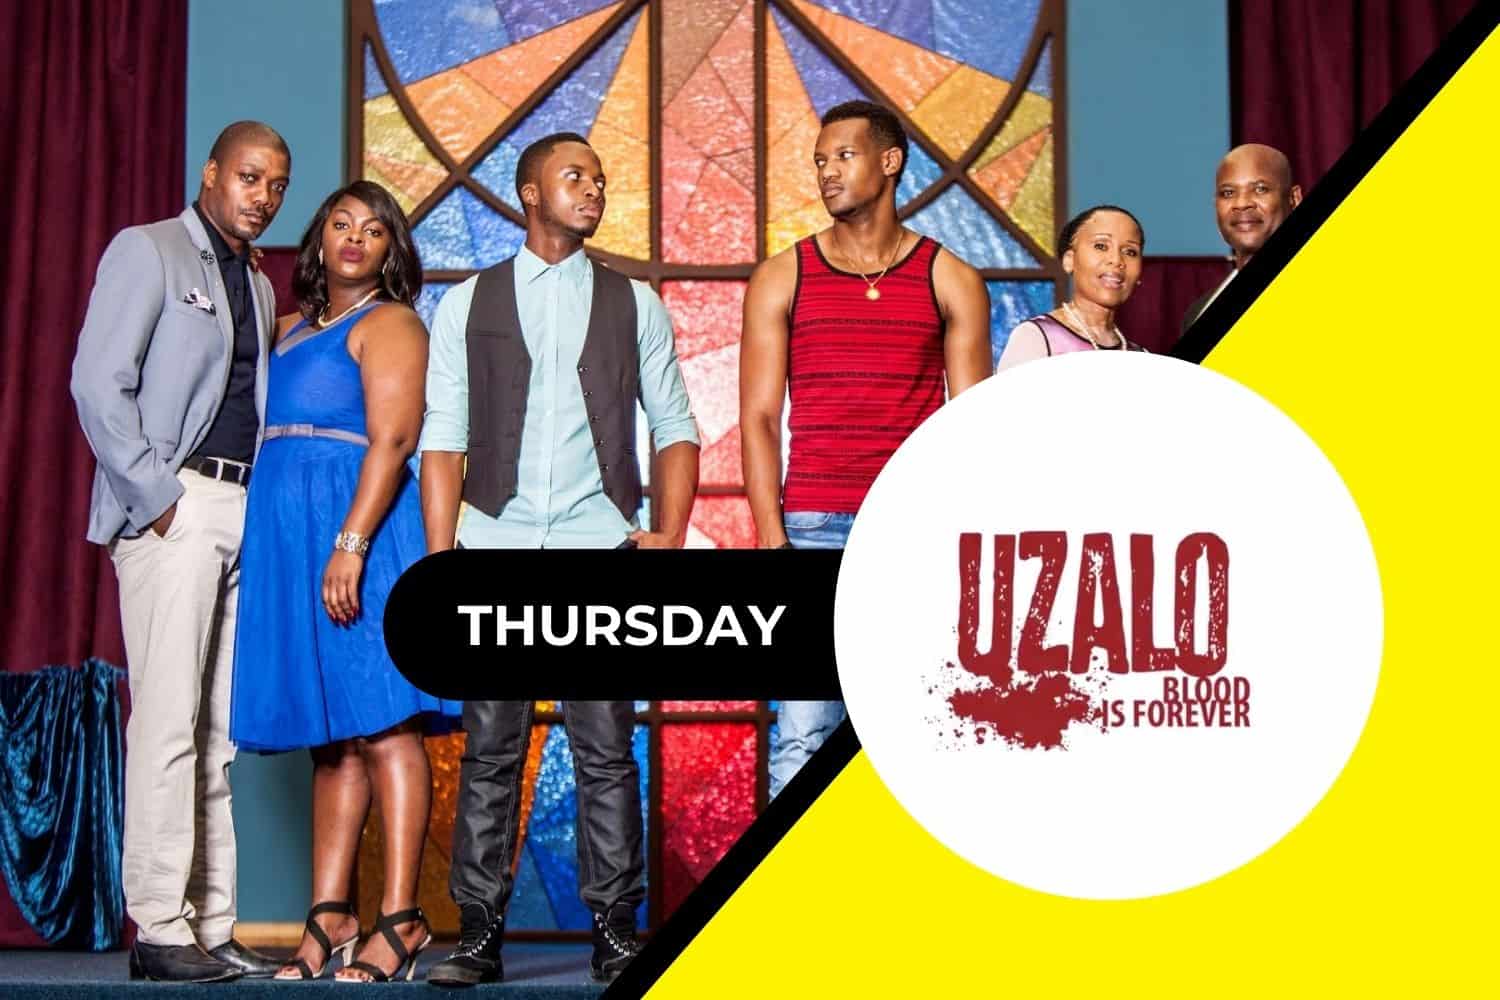 On today's episode of Uzalo 11 November 2021 - Thursday